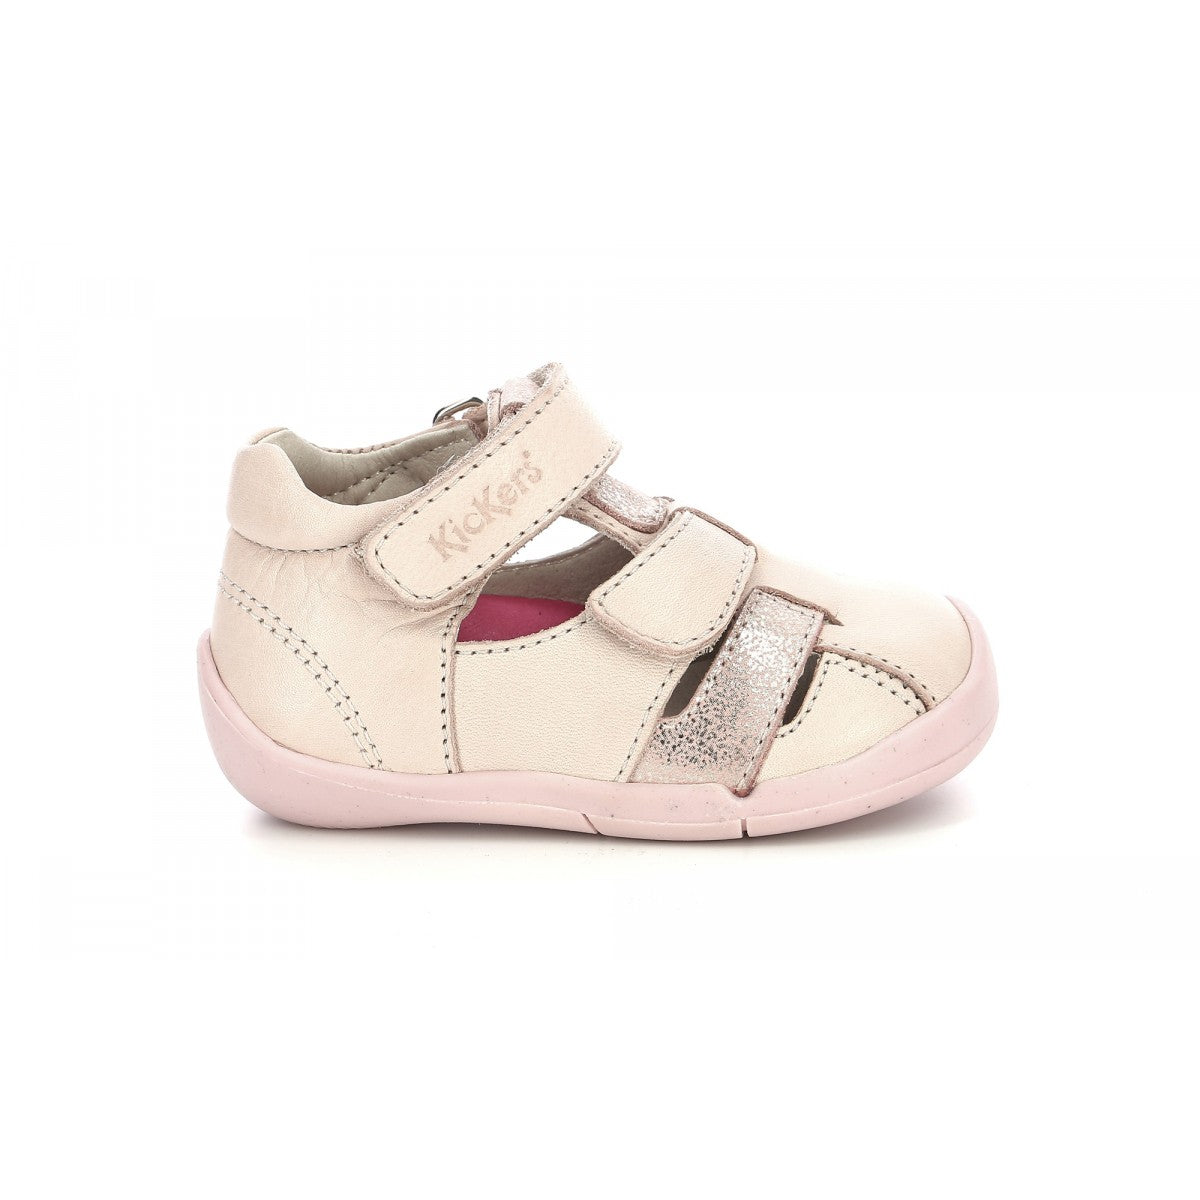 Sandale Kickers - Light pink metallized